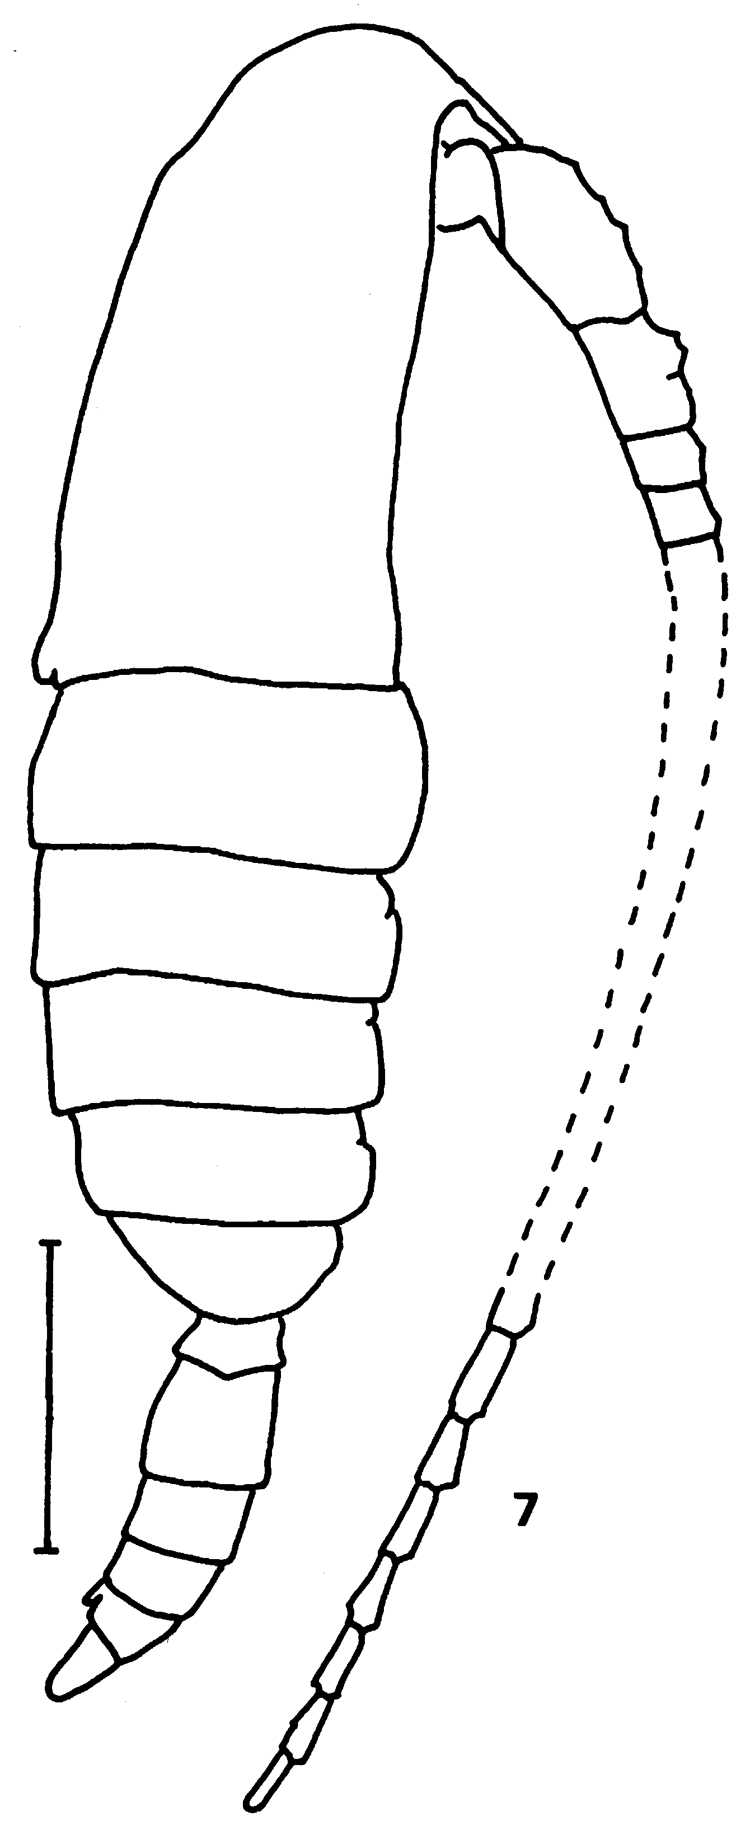 Species Calanus sinicus - Plate 8 of morphological figures